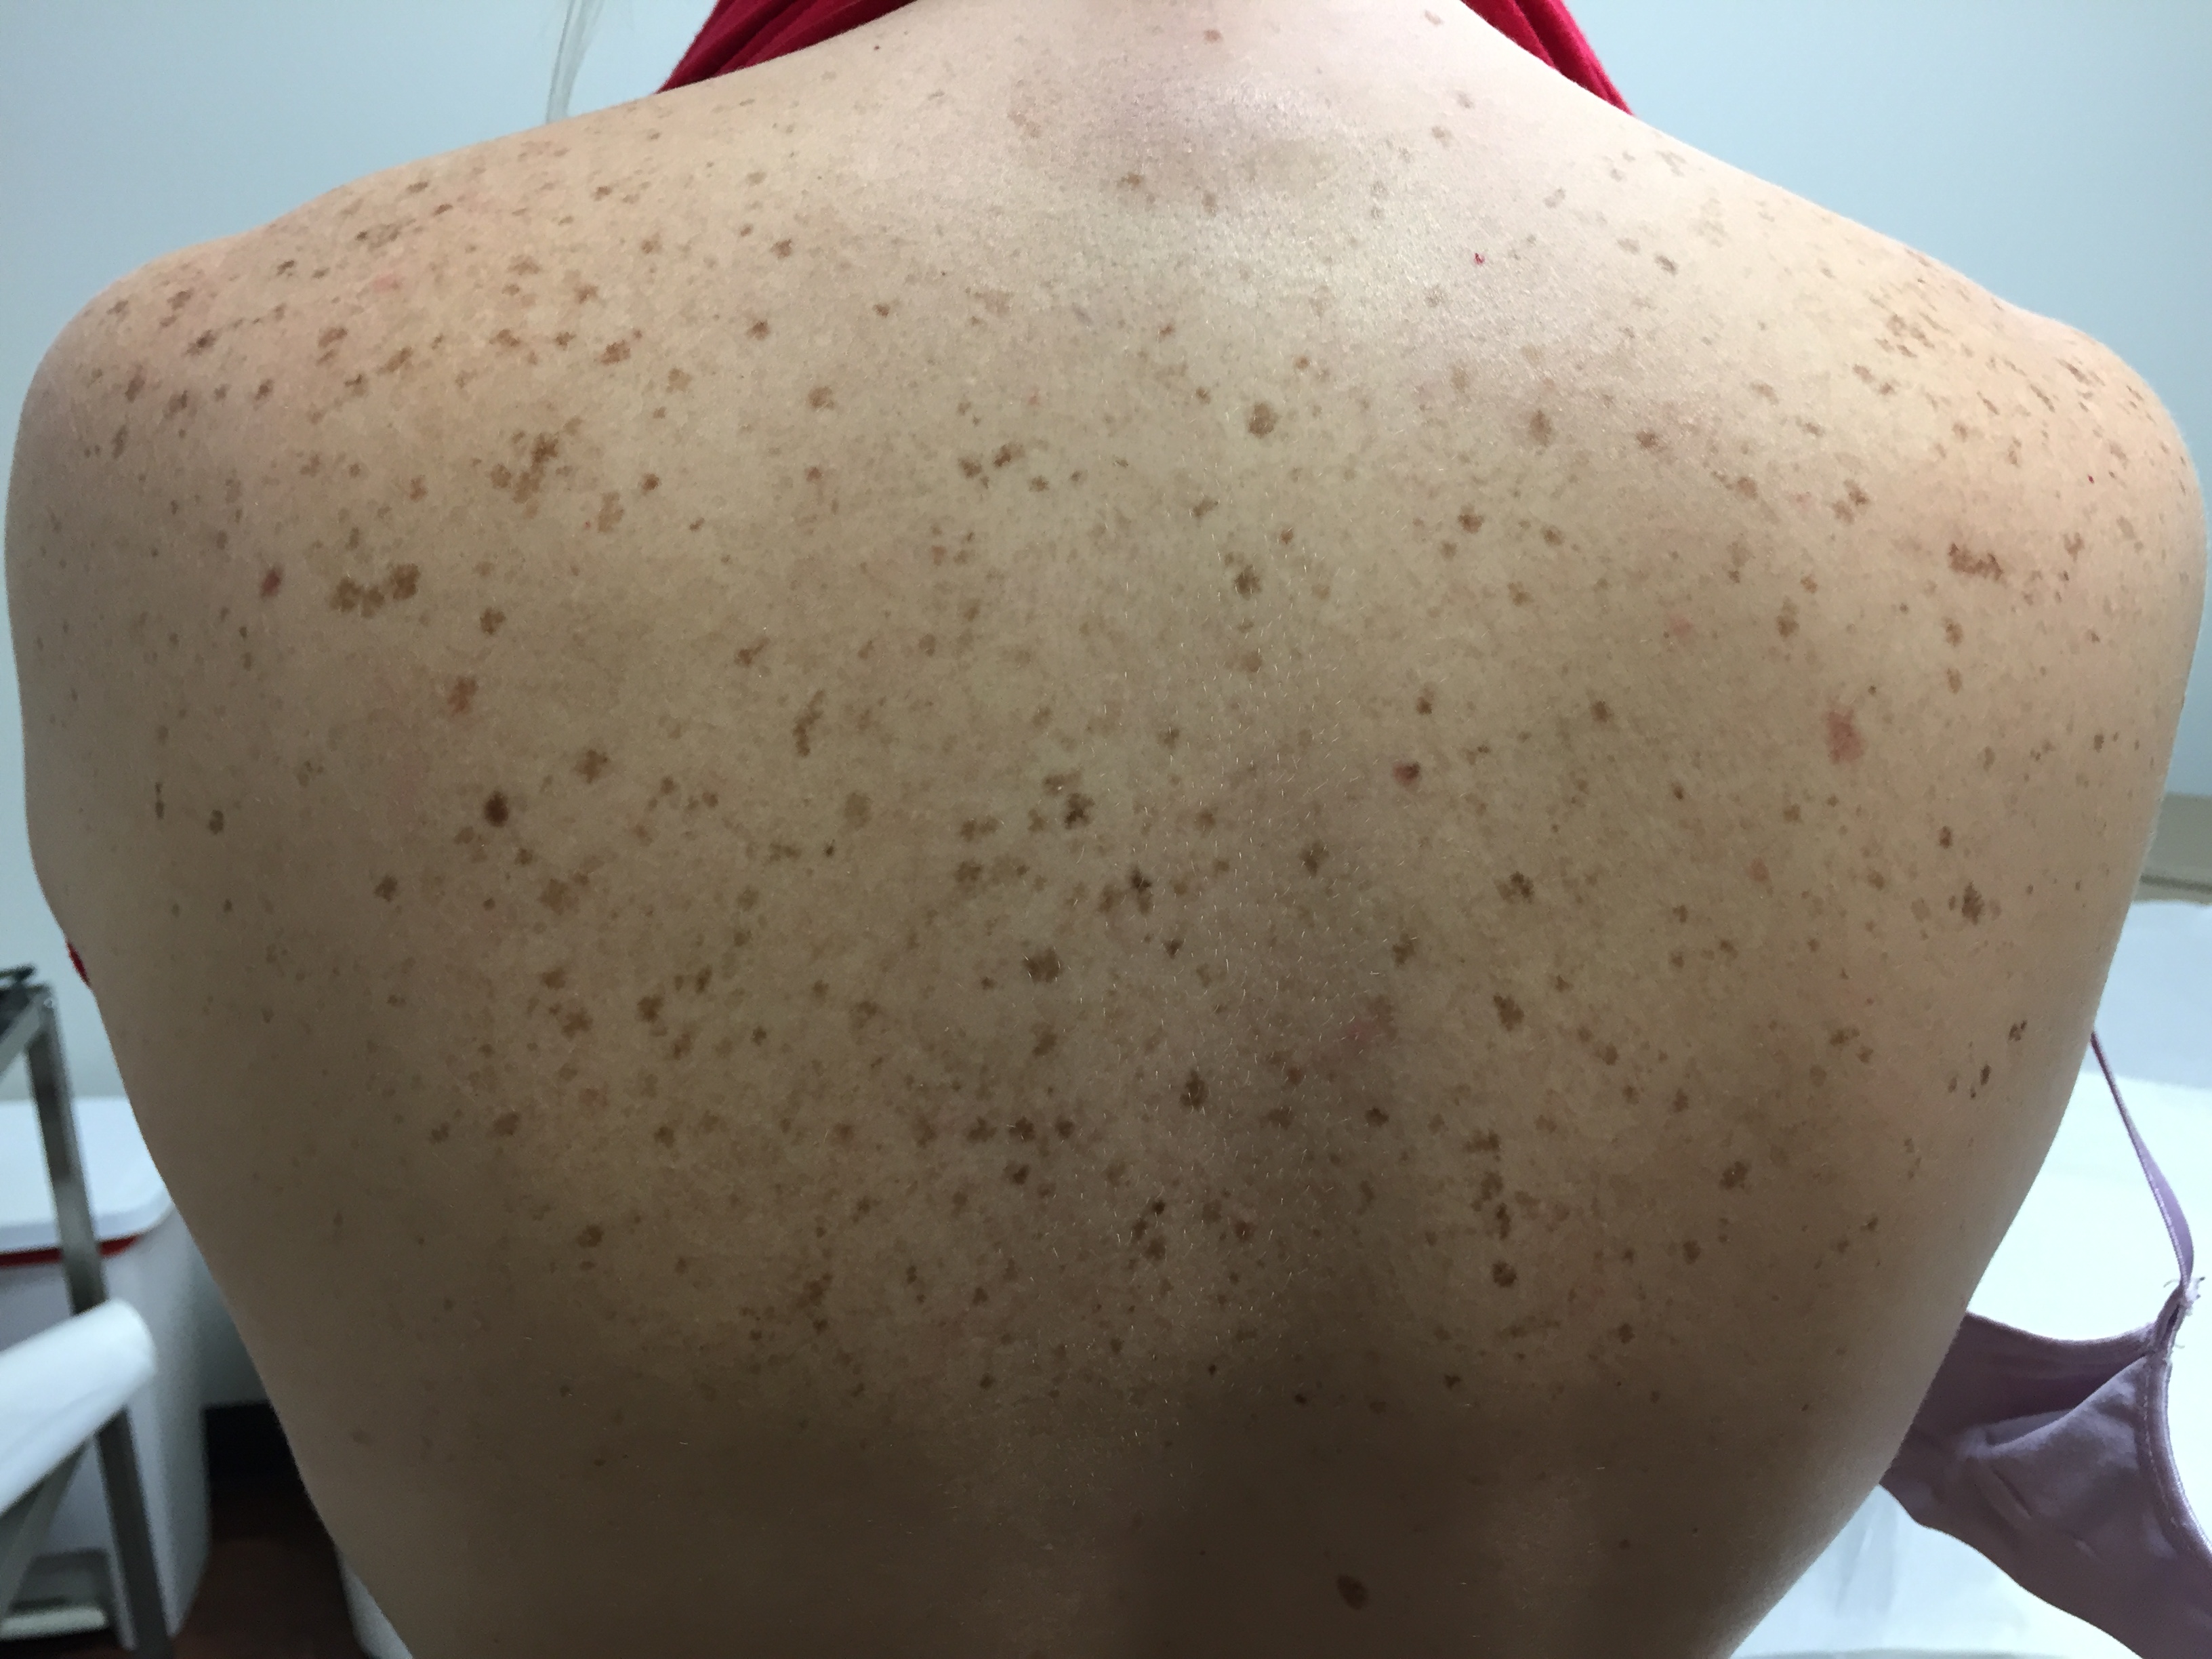 Dallas laser center treating sun spots and age spots